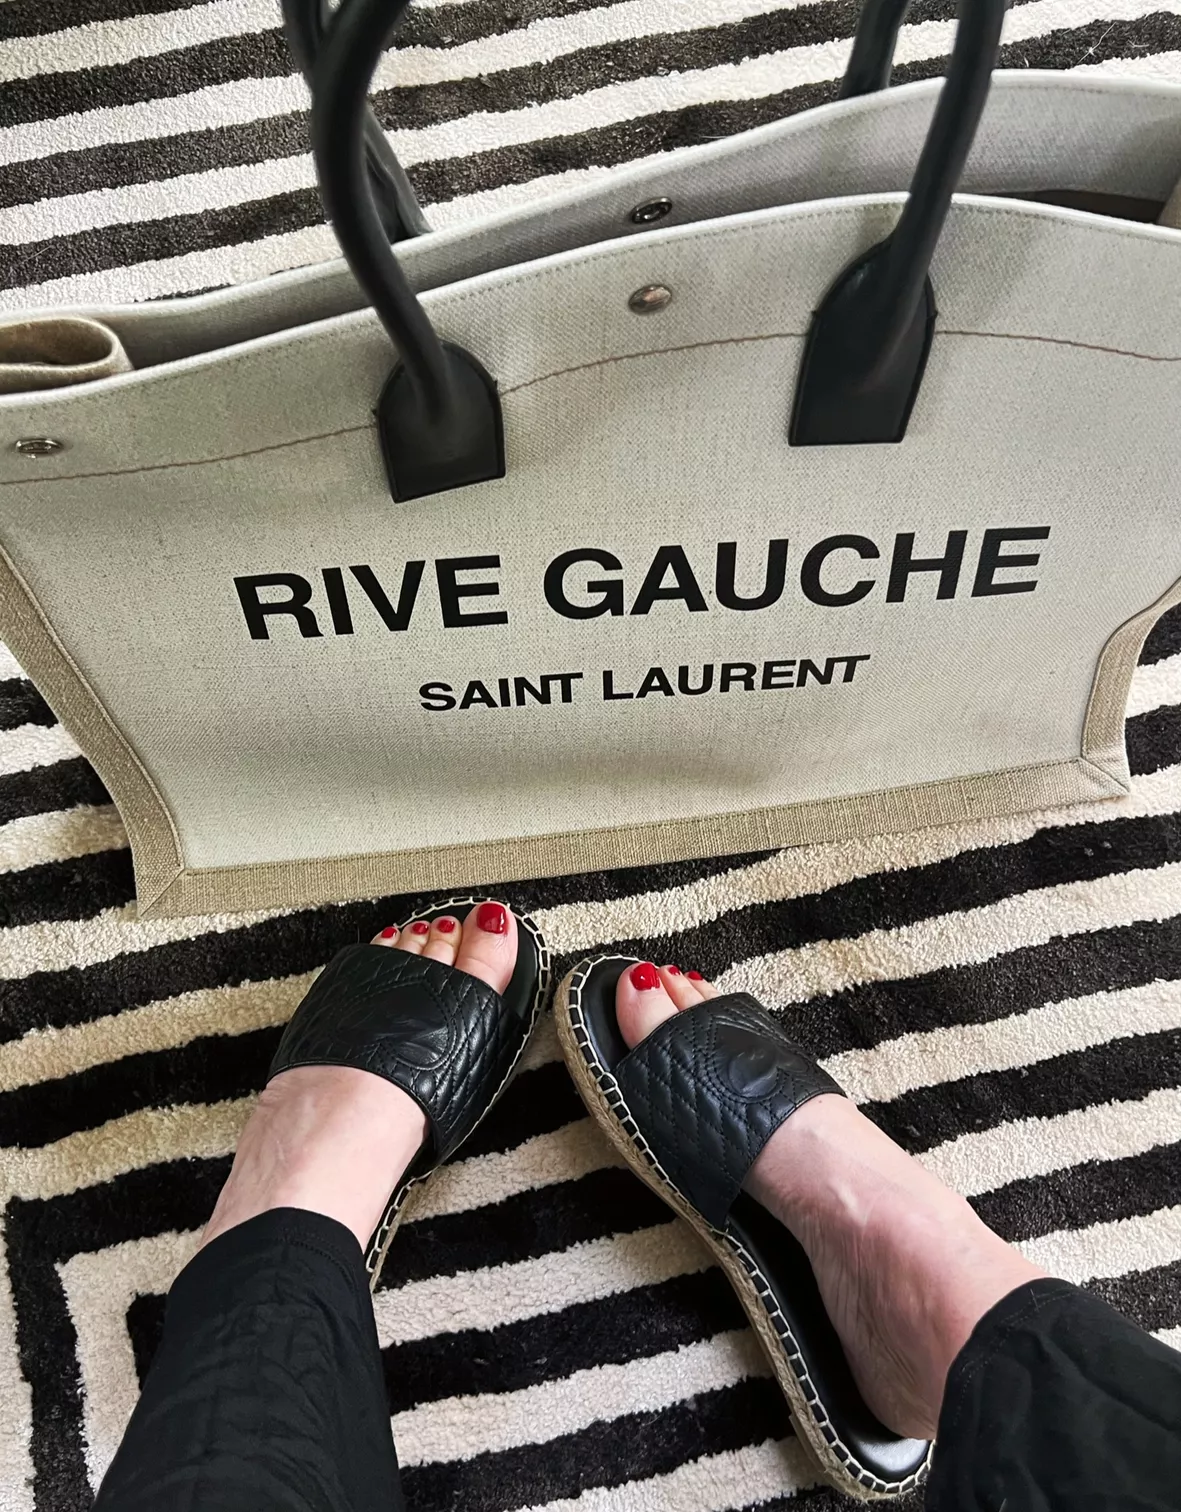 Saint Laurent Rive Gauche Raffia Tote Bag